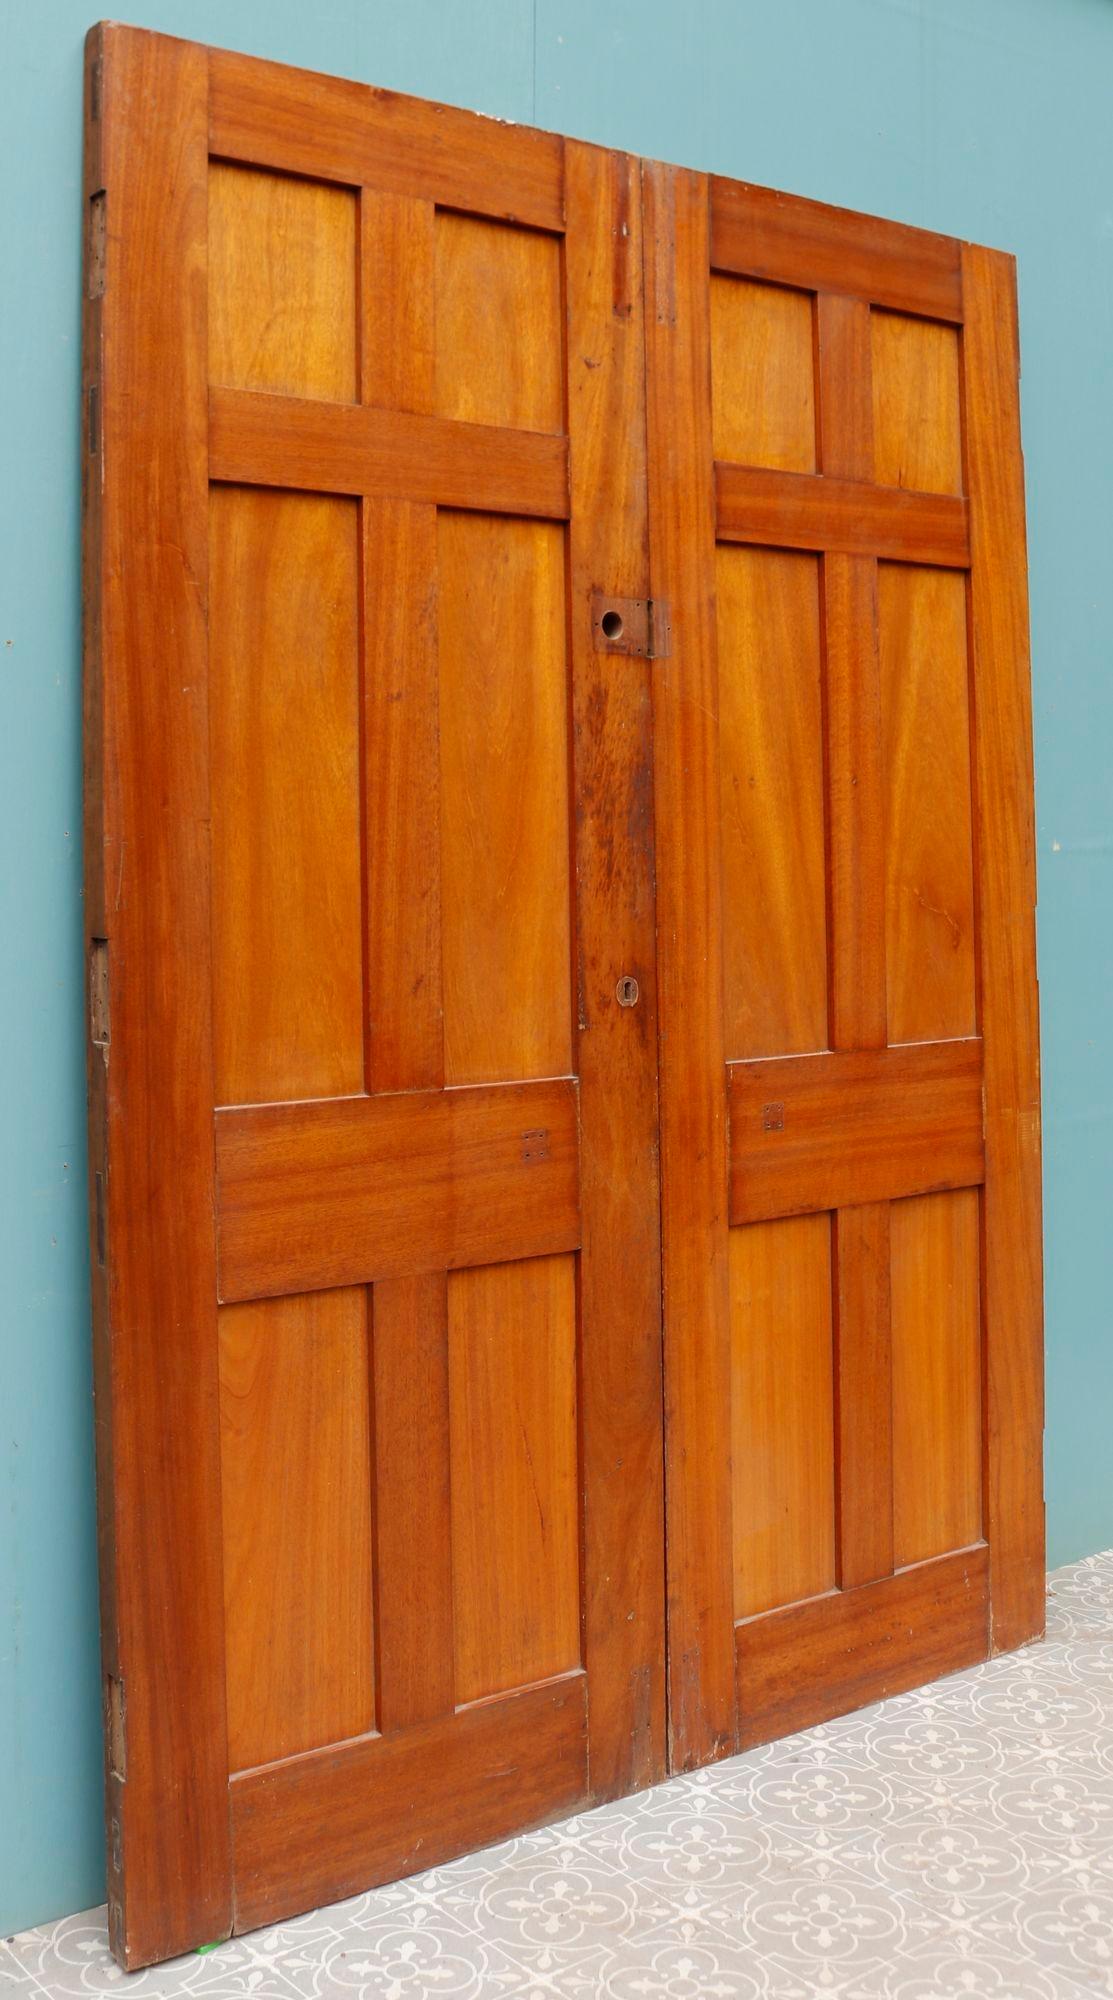 A pair of reclaimed 1950s hardwood doors.

These were originally front doors.